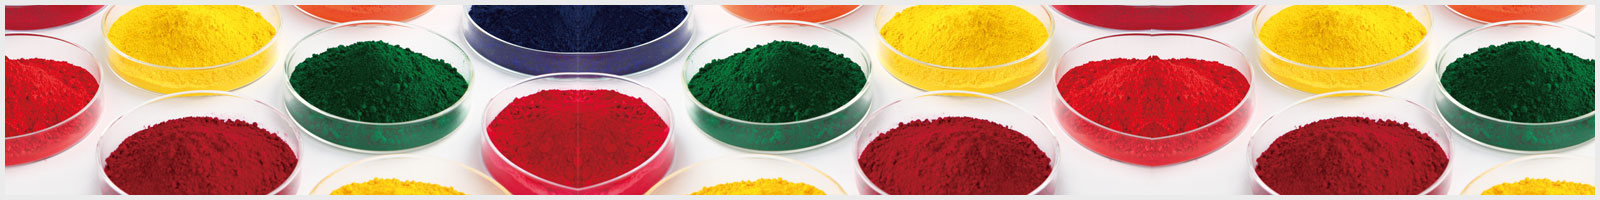 Kolorjet Chemicals Pvt Ltd